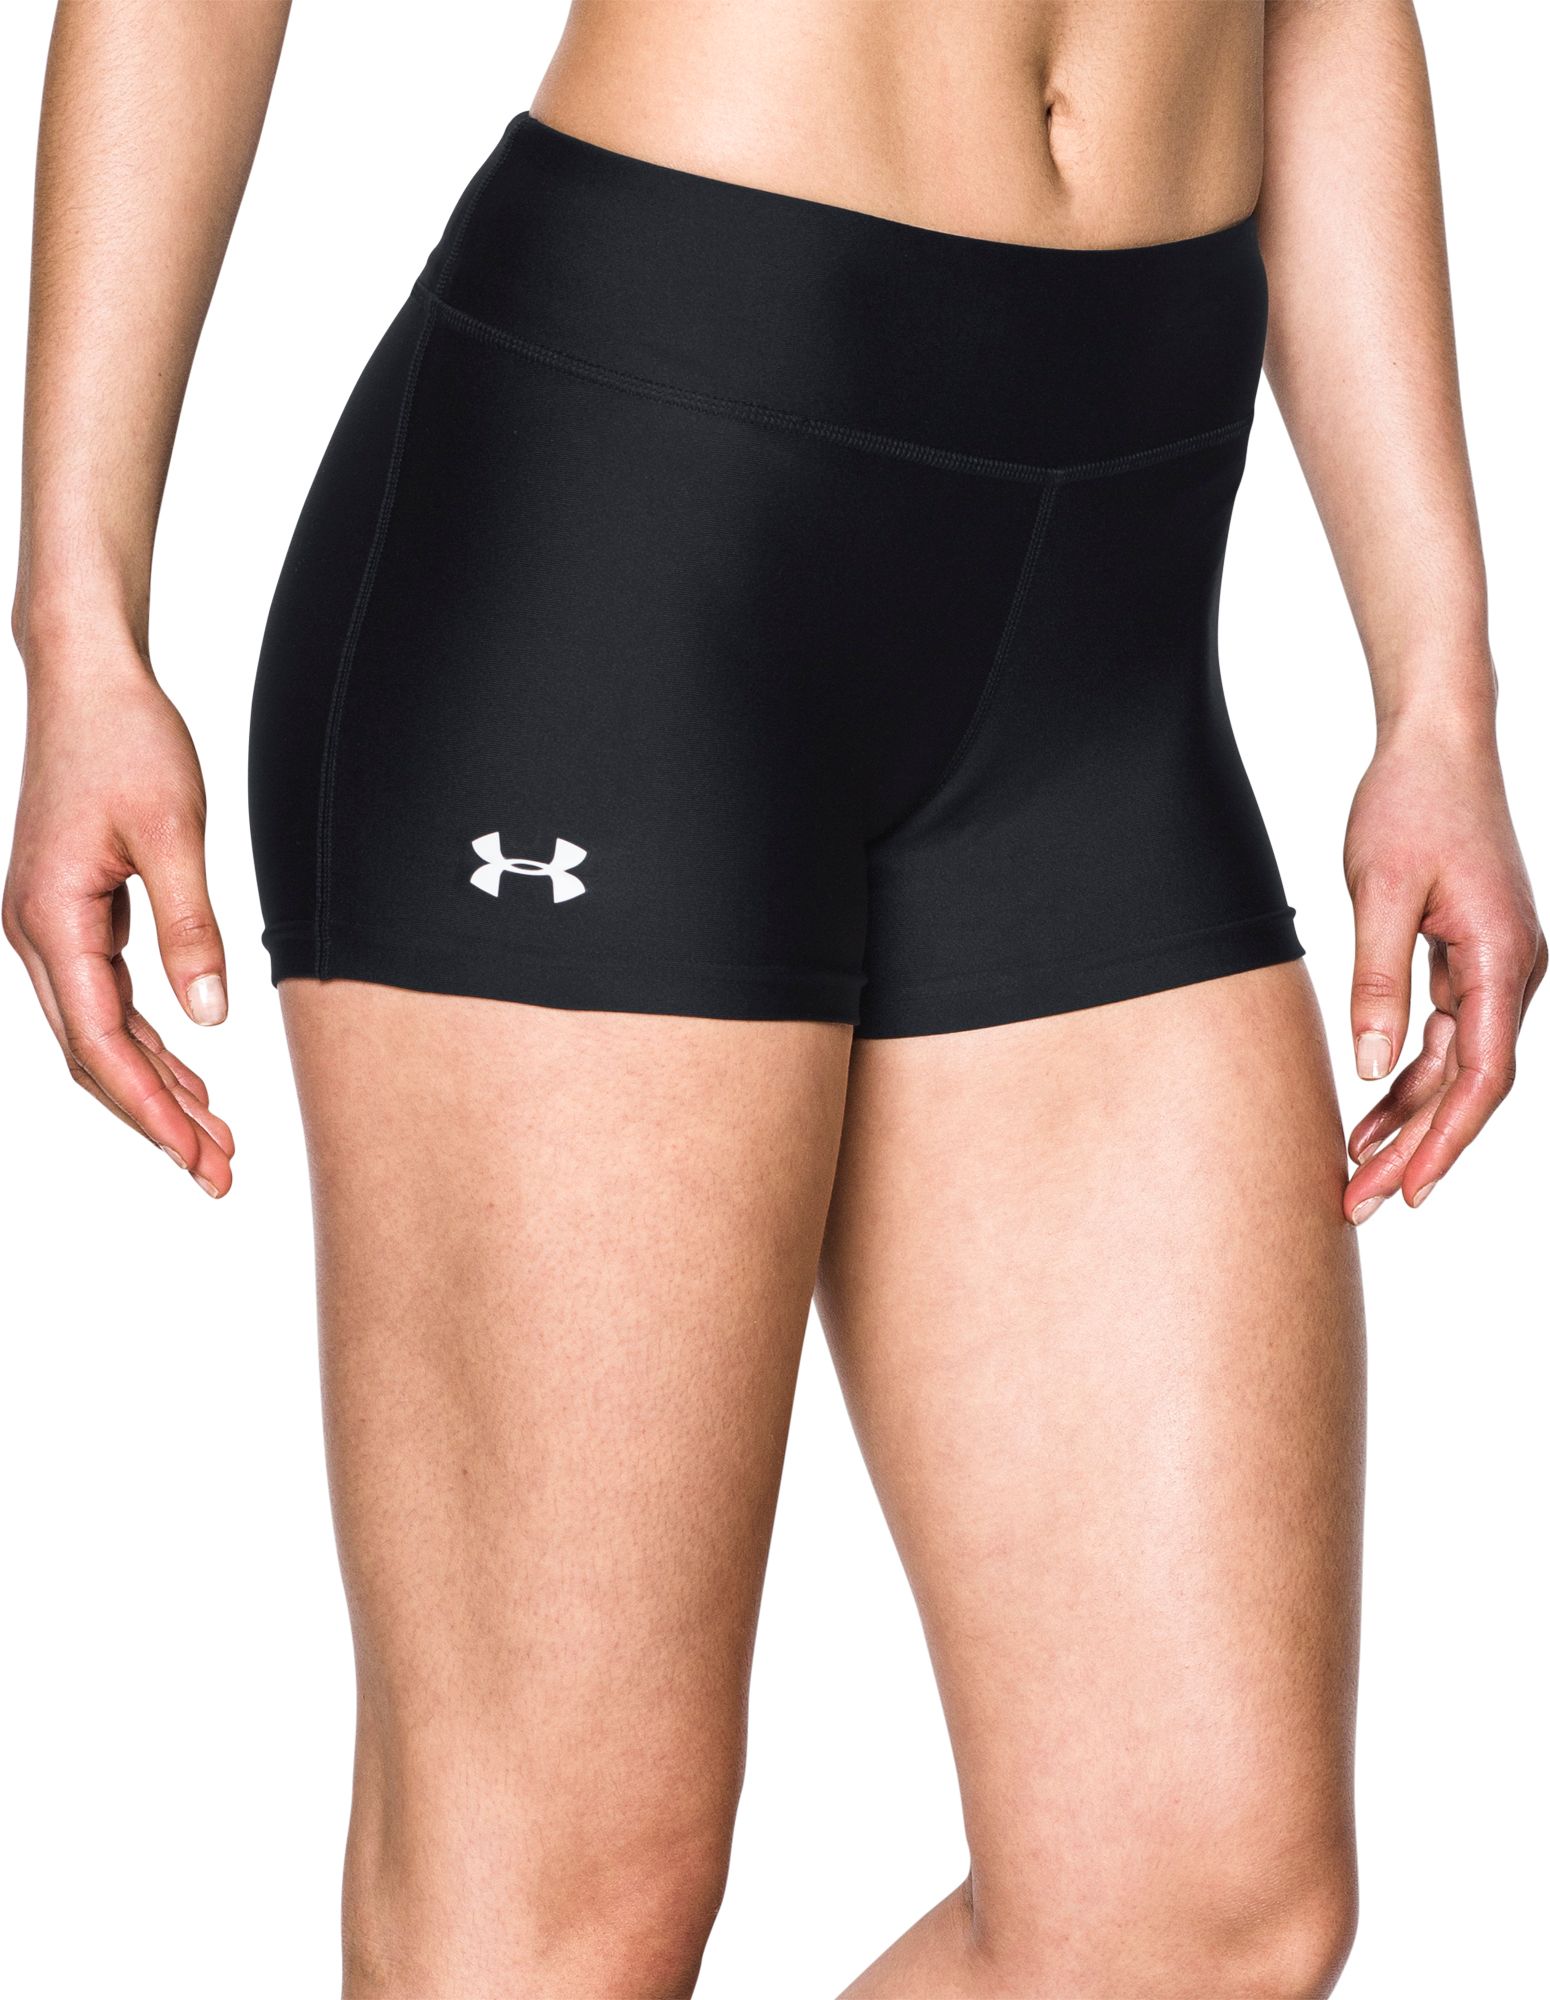 under armor shorts for women